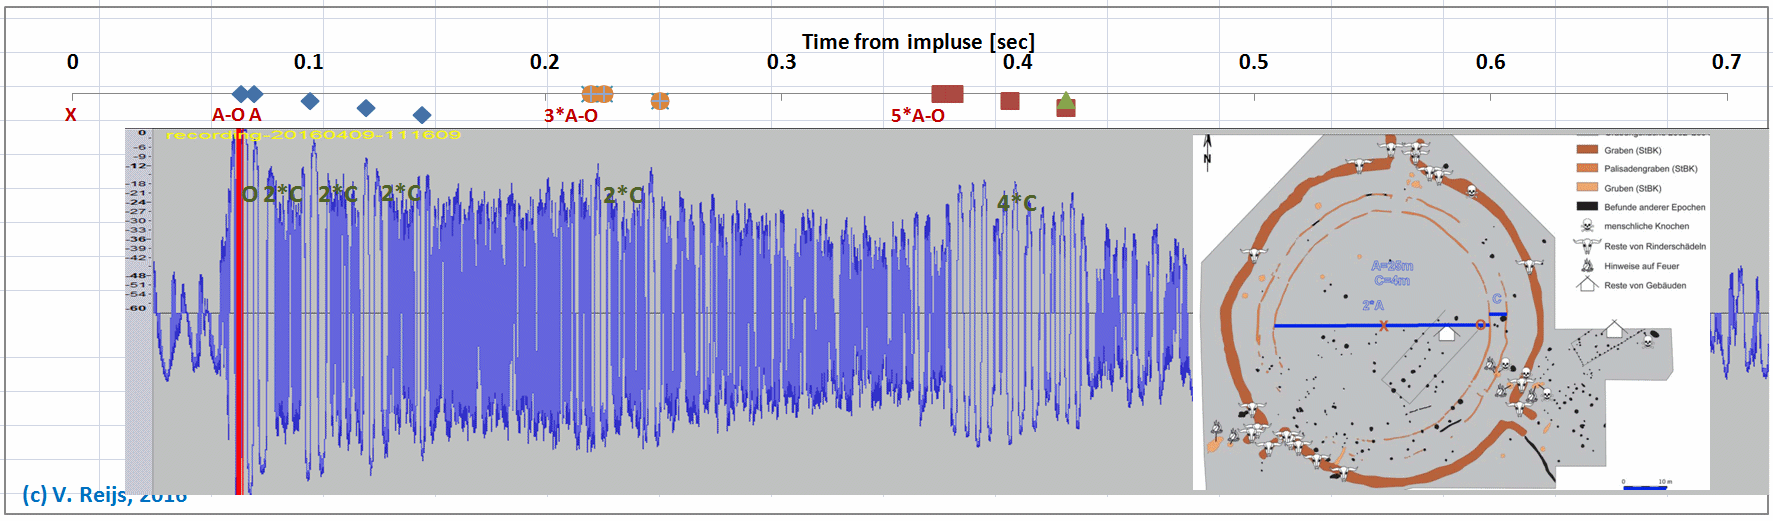 Simulation and actual peaks in impulse
        response of Goseck